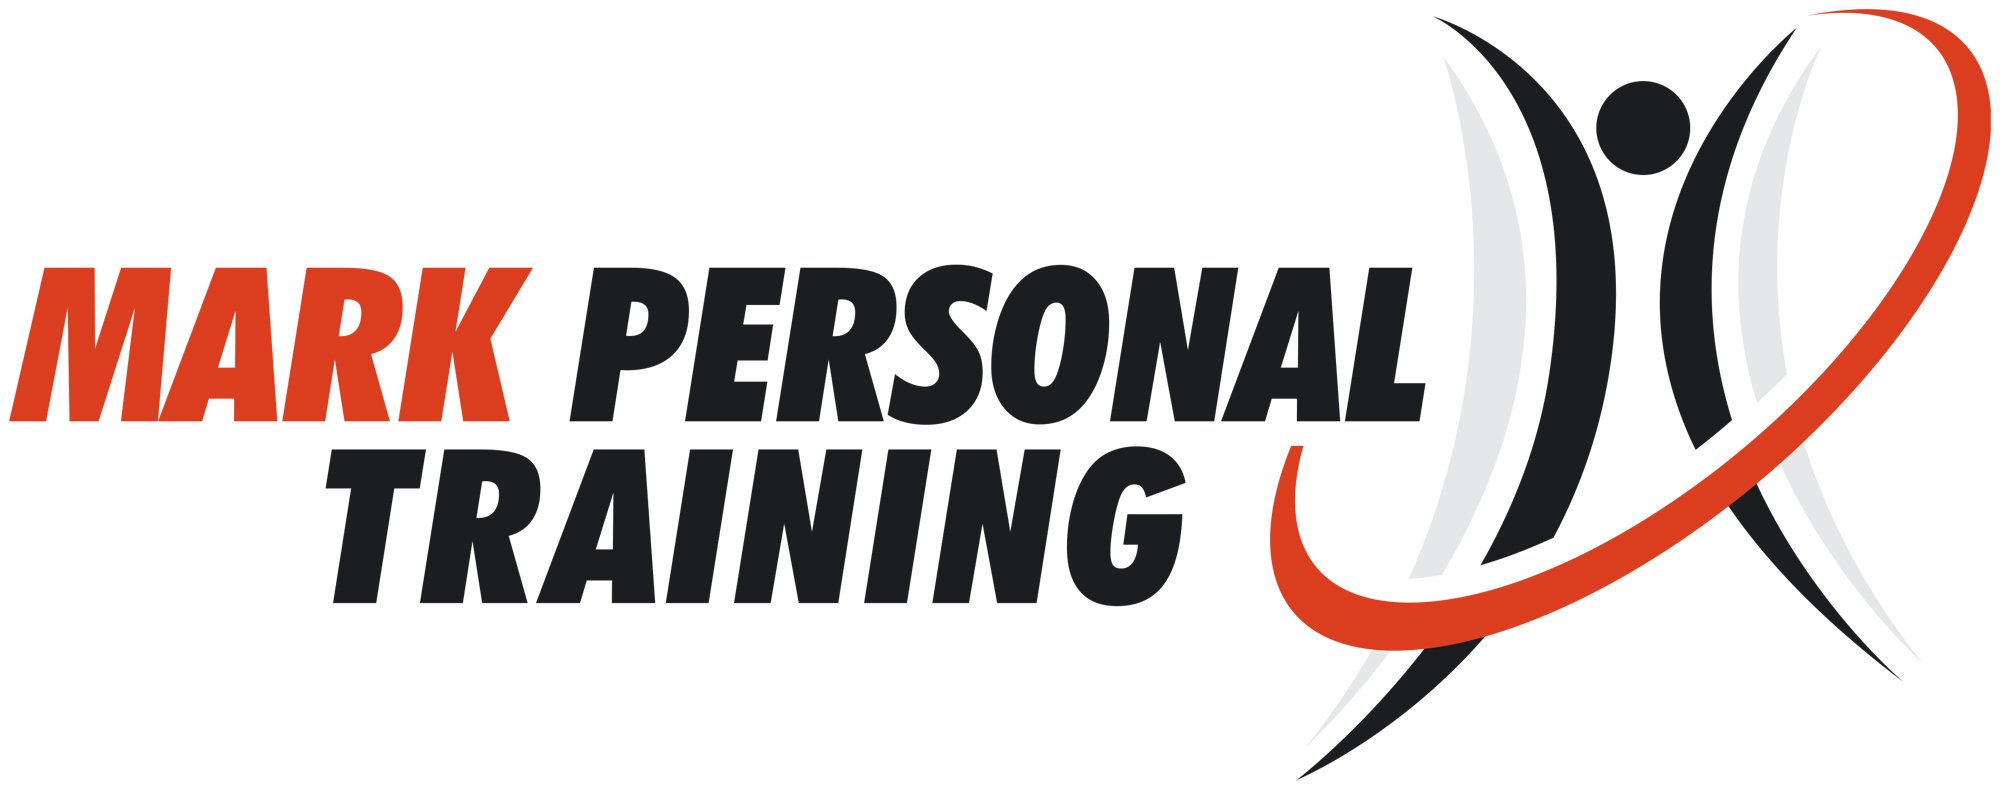 Mark Personal Training